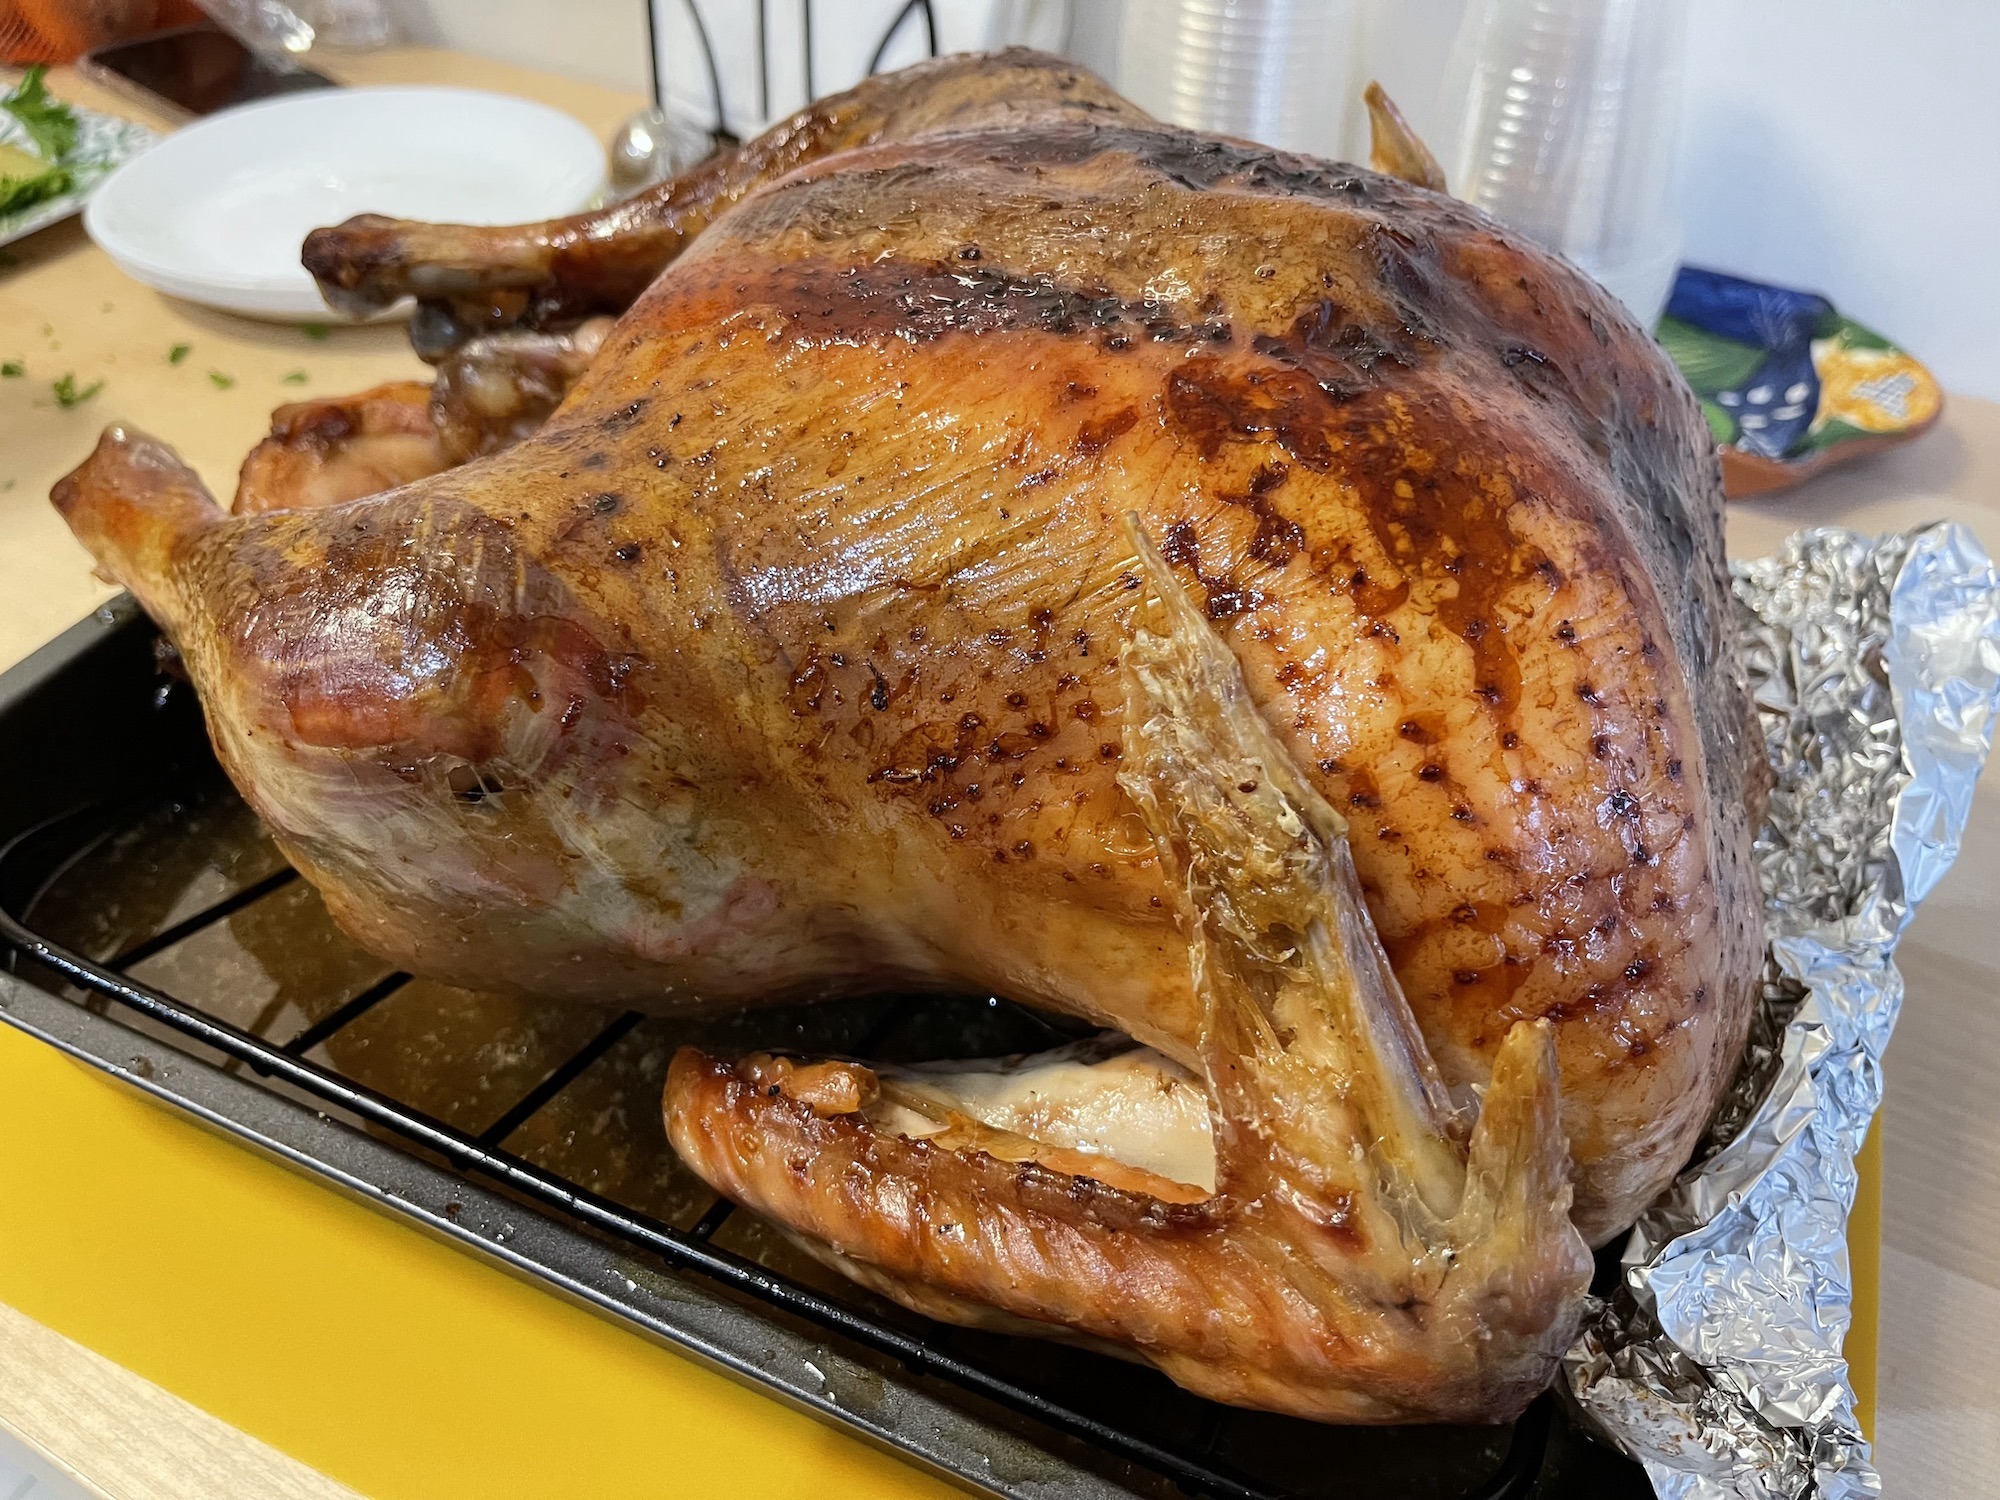 Full roasted turkey in Portugal